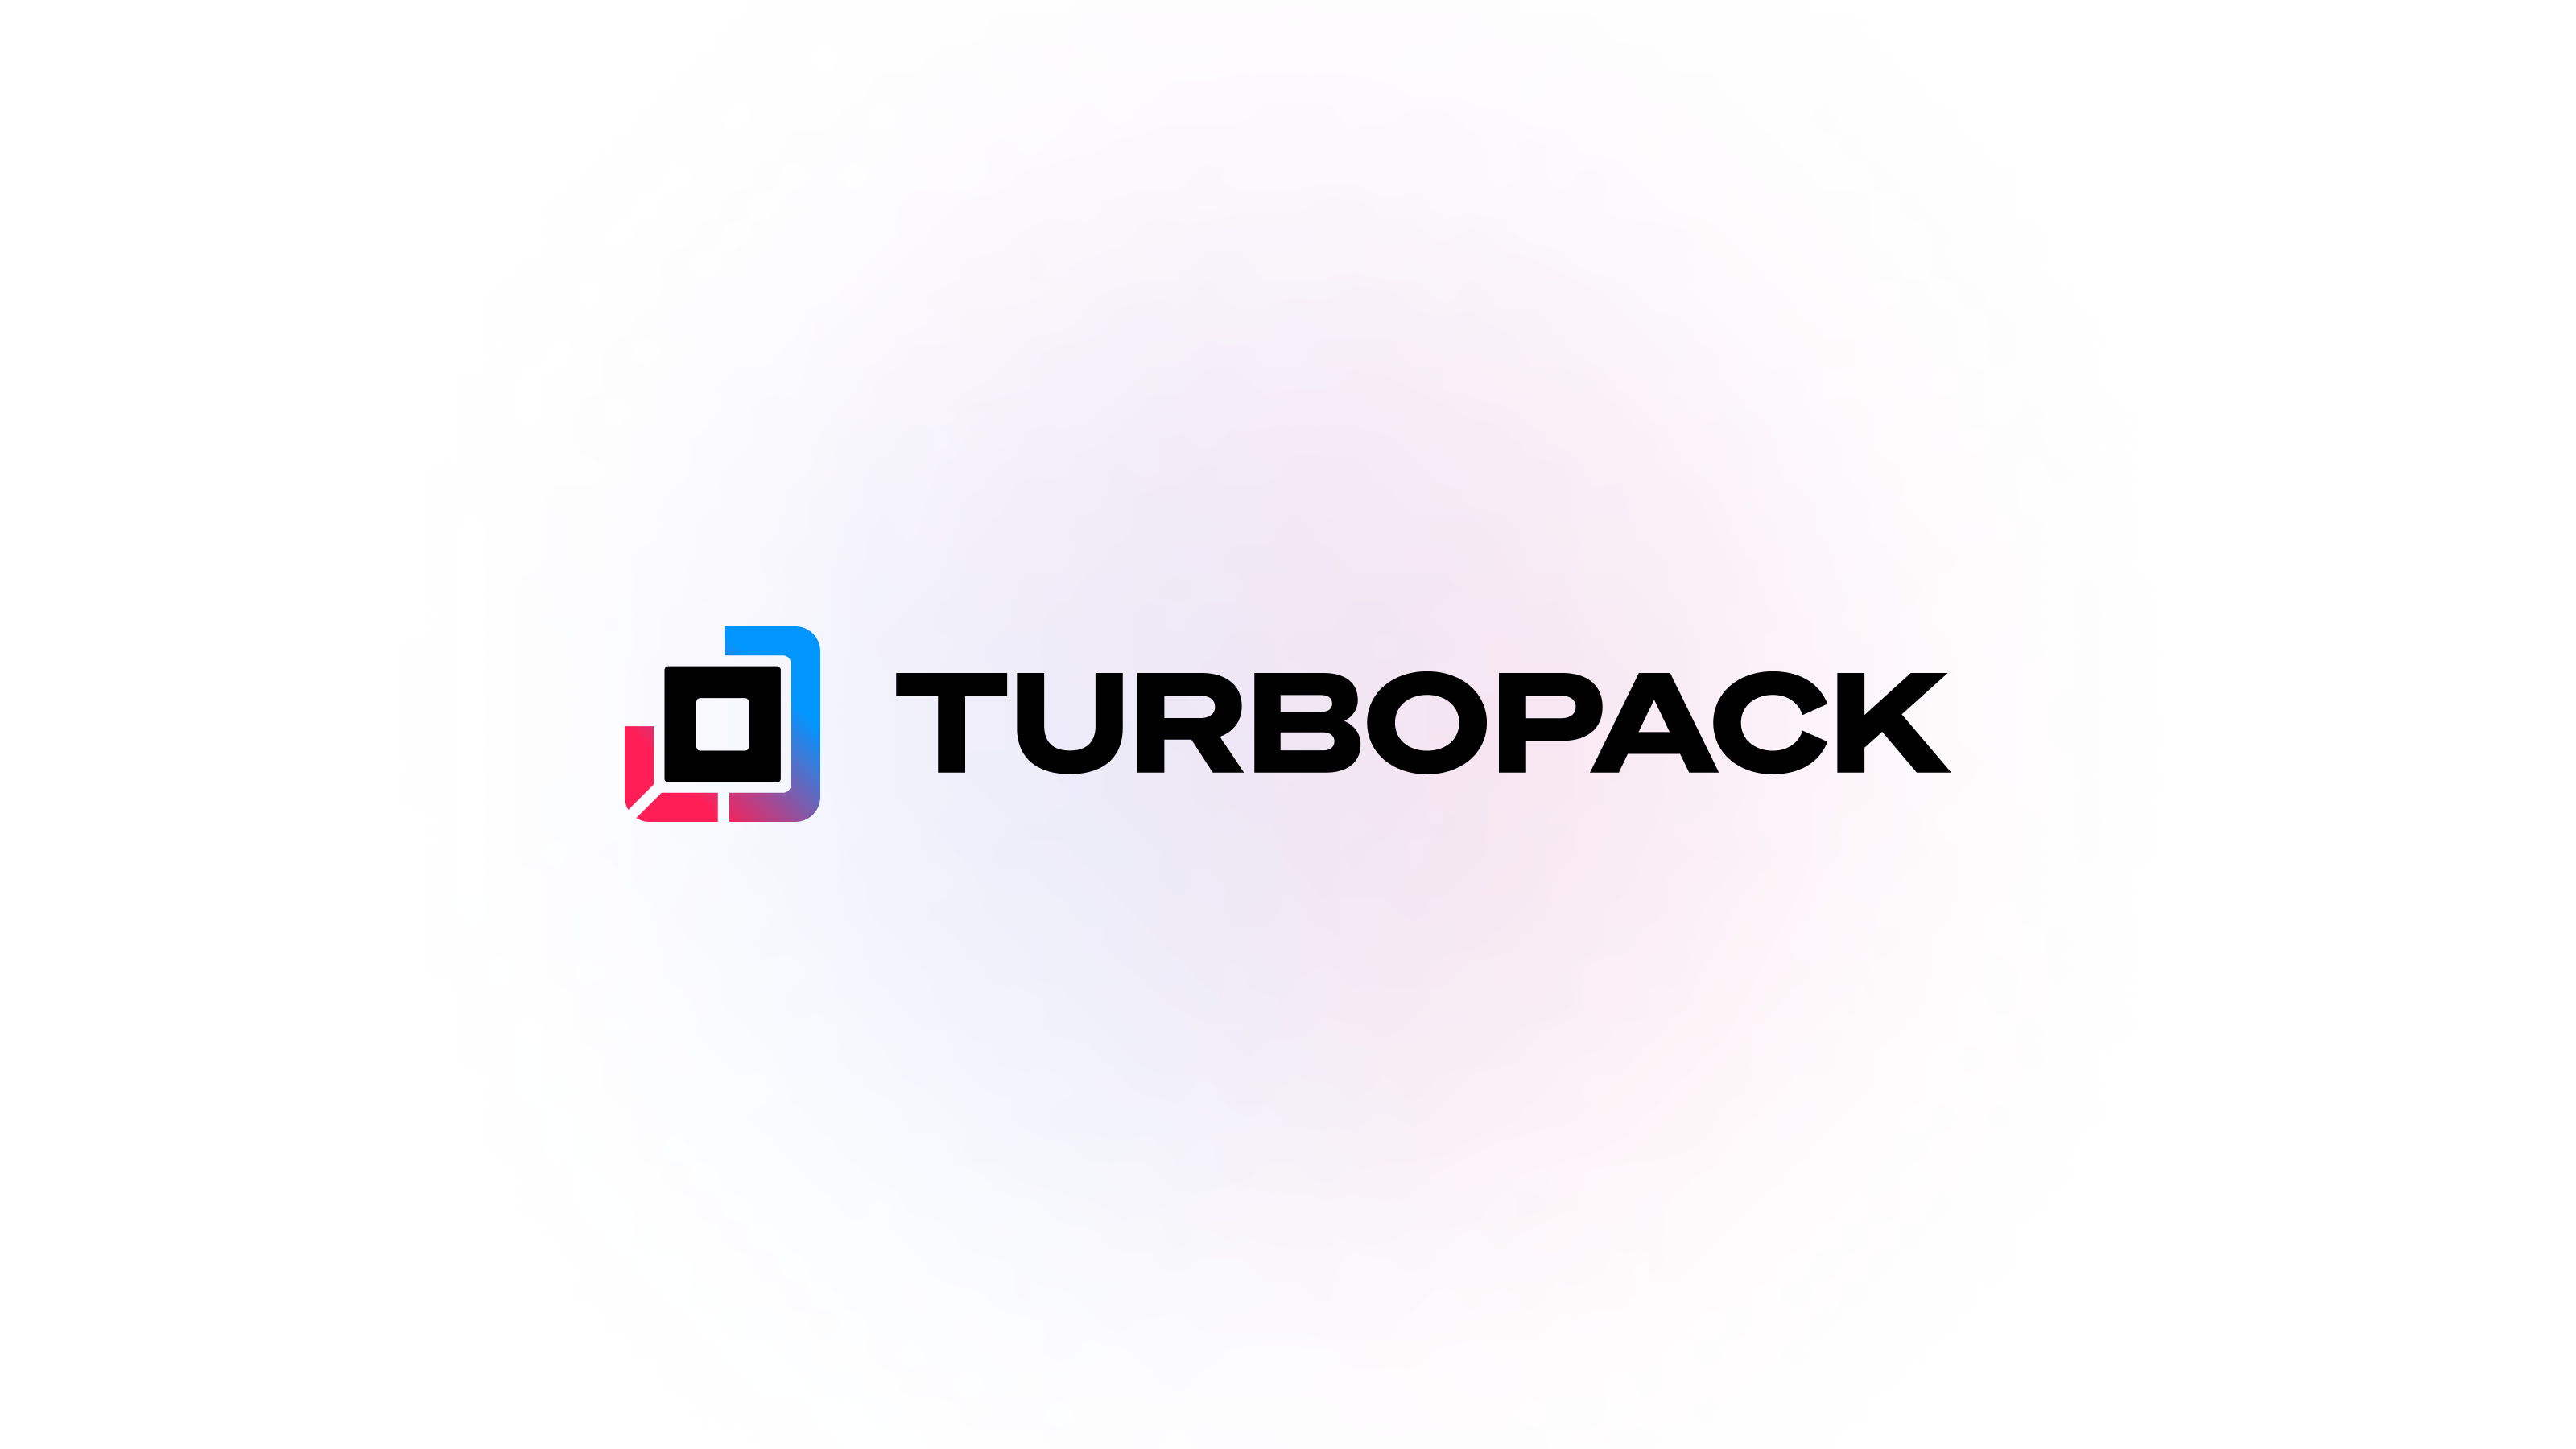 Introducing Turbopack, the Rust-based successor to Webpack.